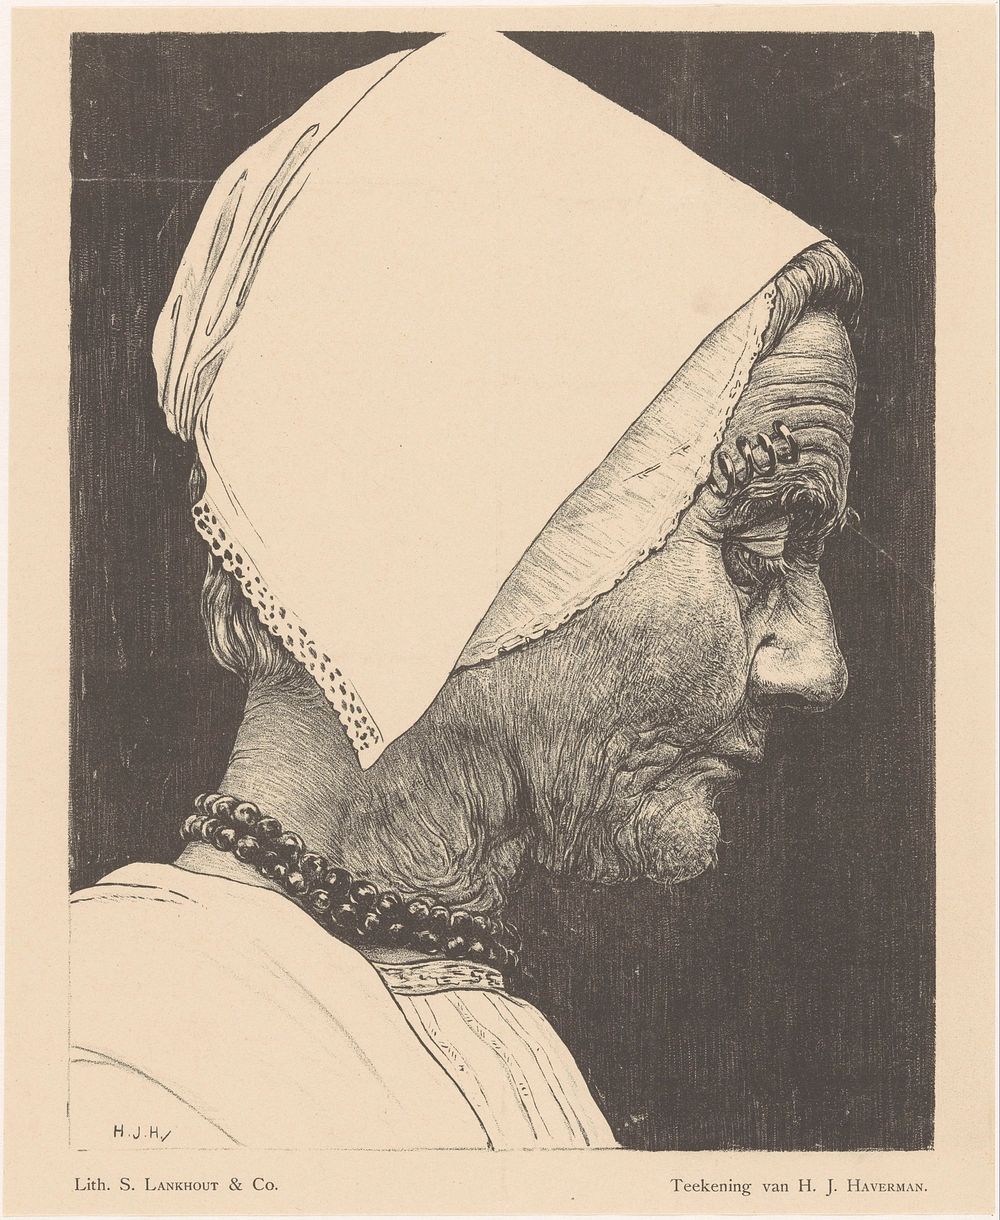 Boerin van Walcheren (1897) by Hendrik Johannes Haverman and Samuel Lankhout and Co